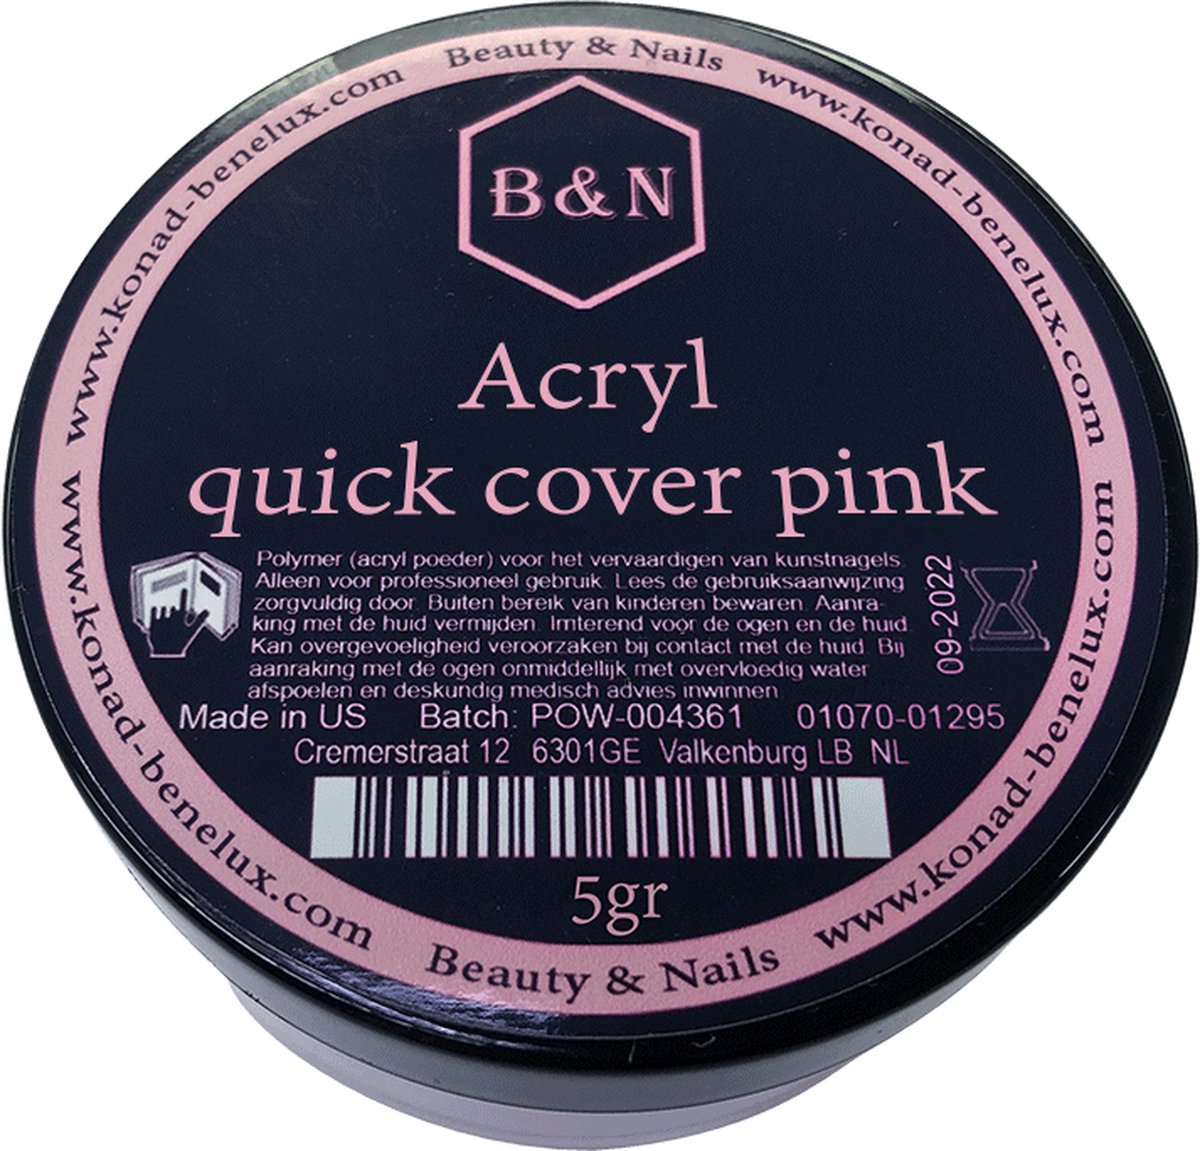 Acryl - quick cover pink - 5 gr | B&N - acrylpoeder - VEGAN - acrylpoeder